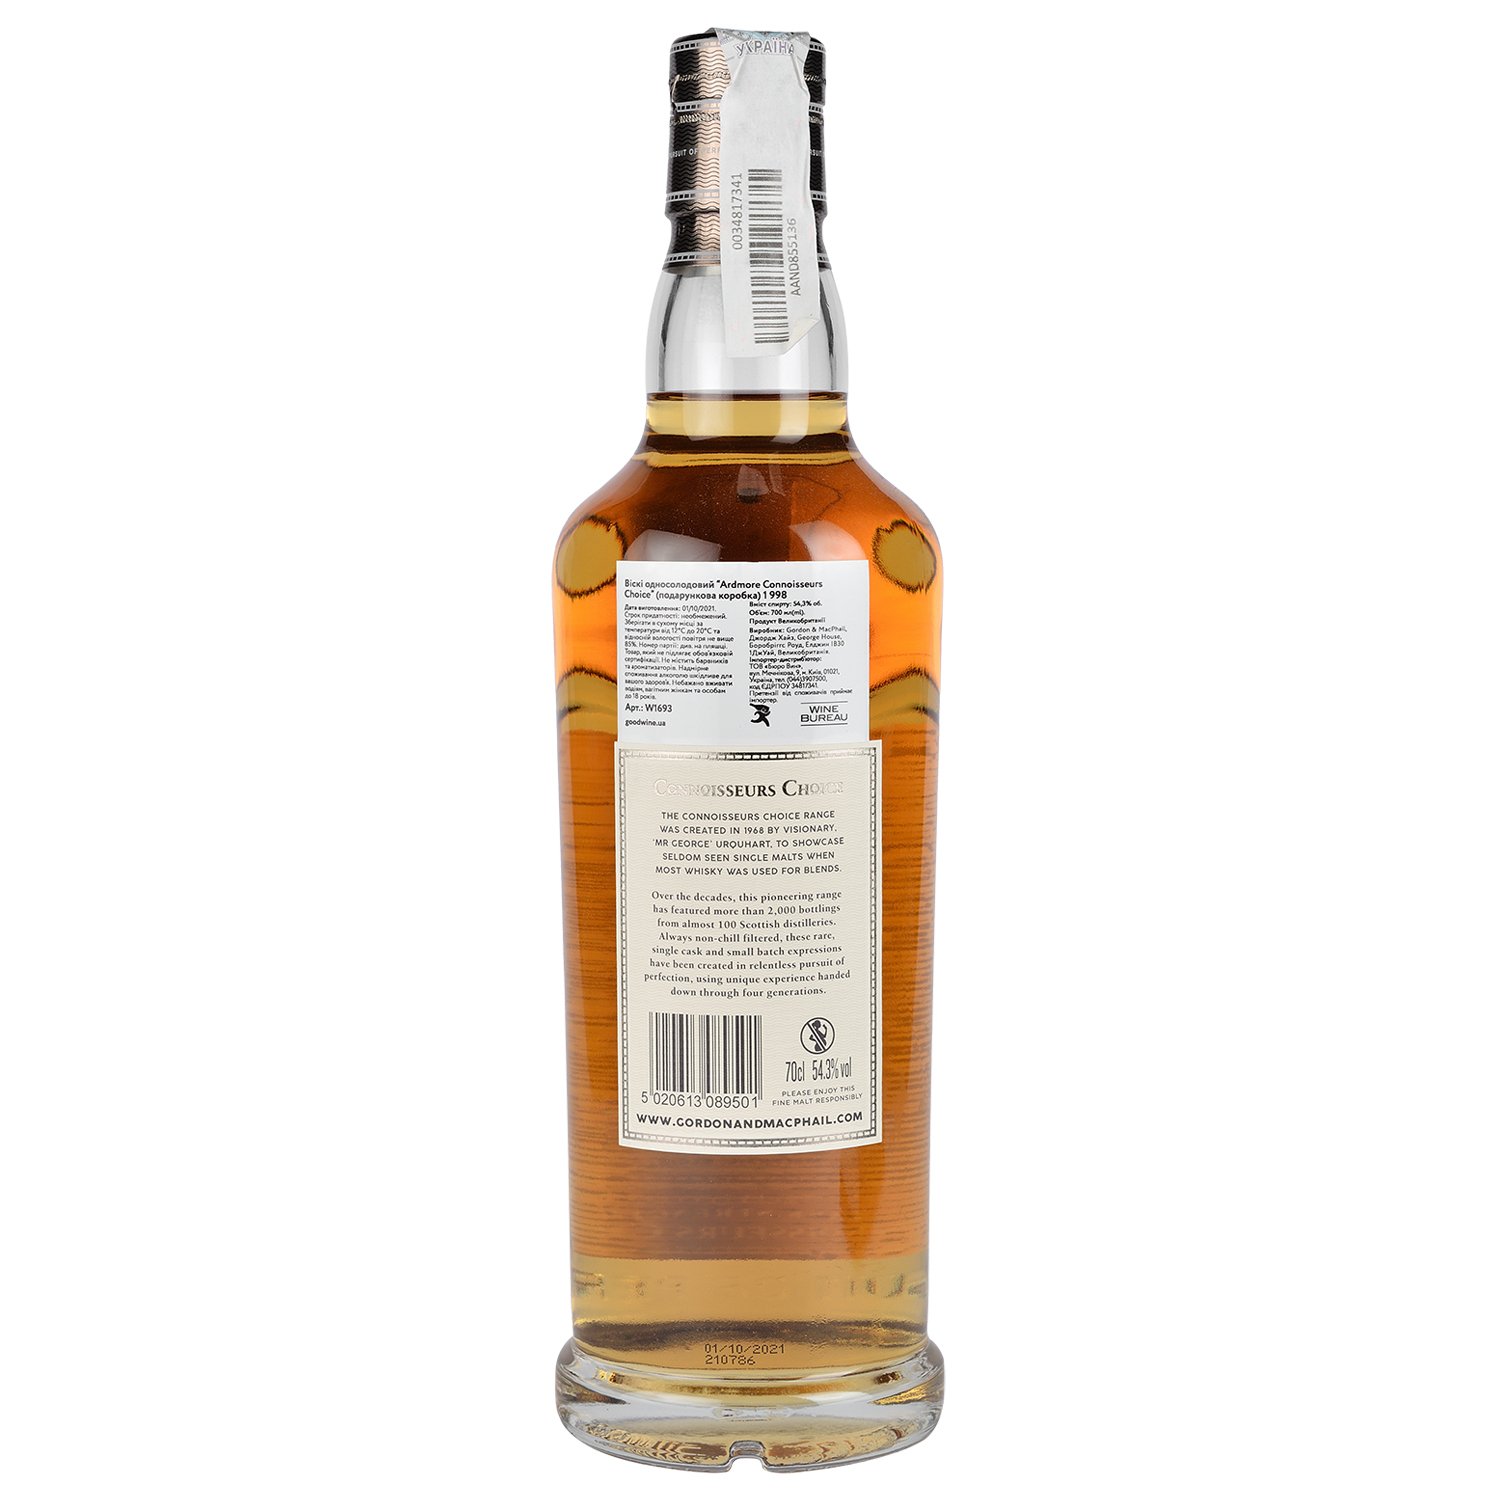 Віскі Gordon&MacPhail Ardmore Connoisseurs Choice 1998 Batch 21/176 Single Malt Scotch Whisky, в подарунковій упаковці, 54,3%, 0,7 л - фото 4